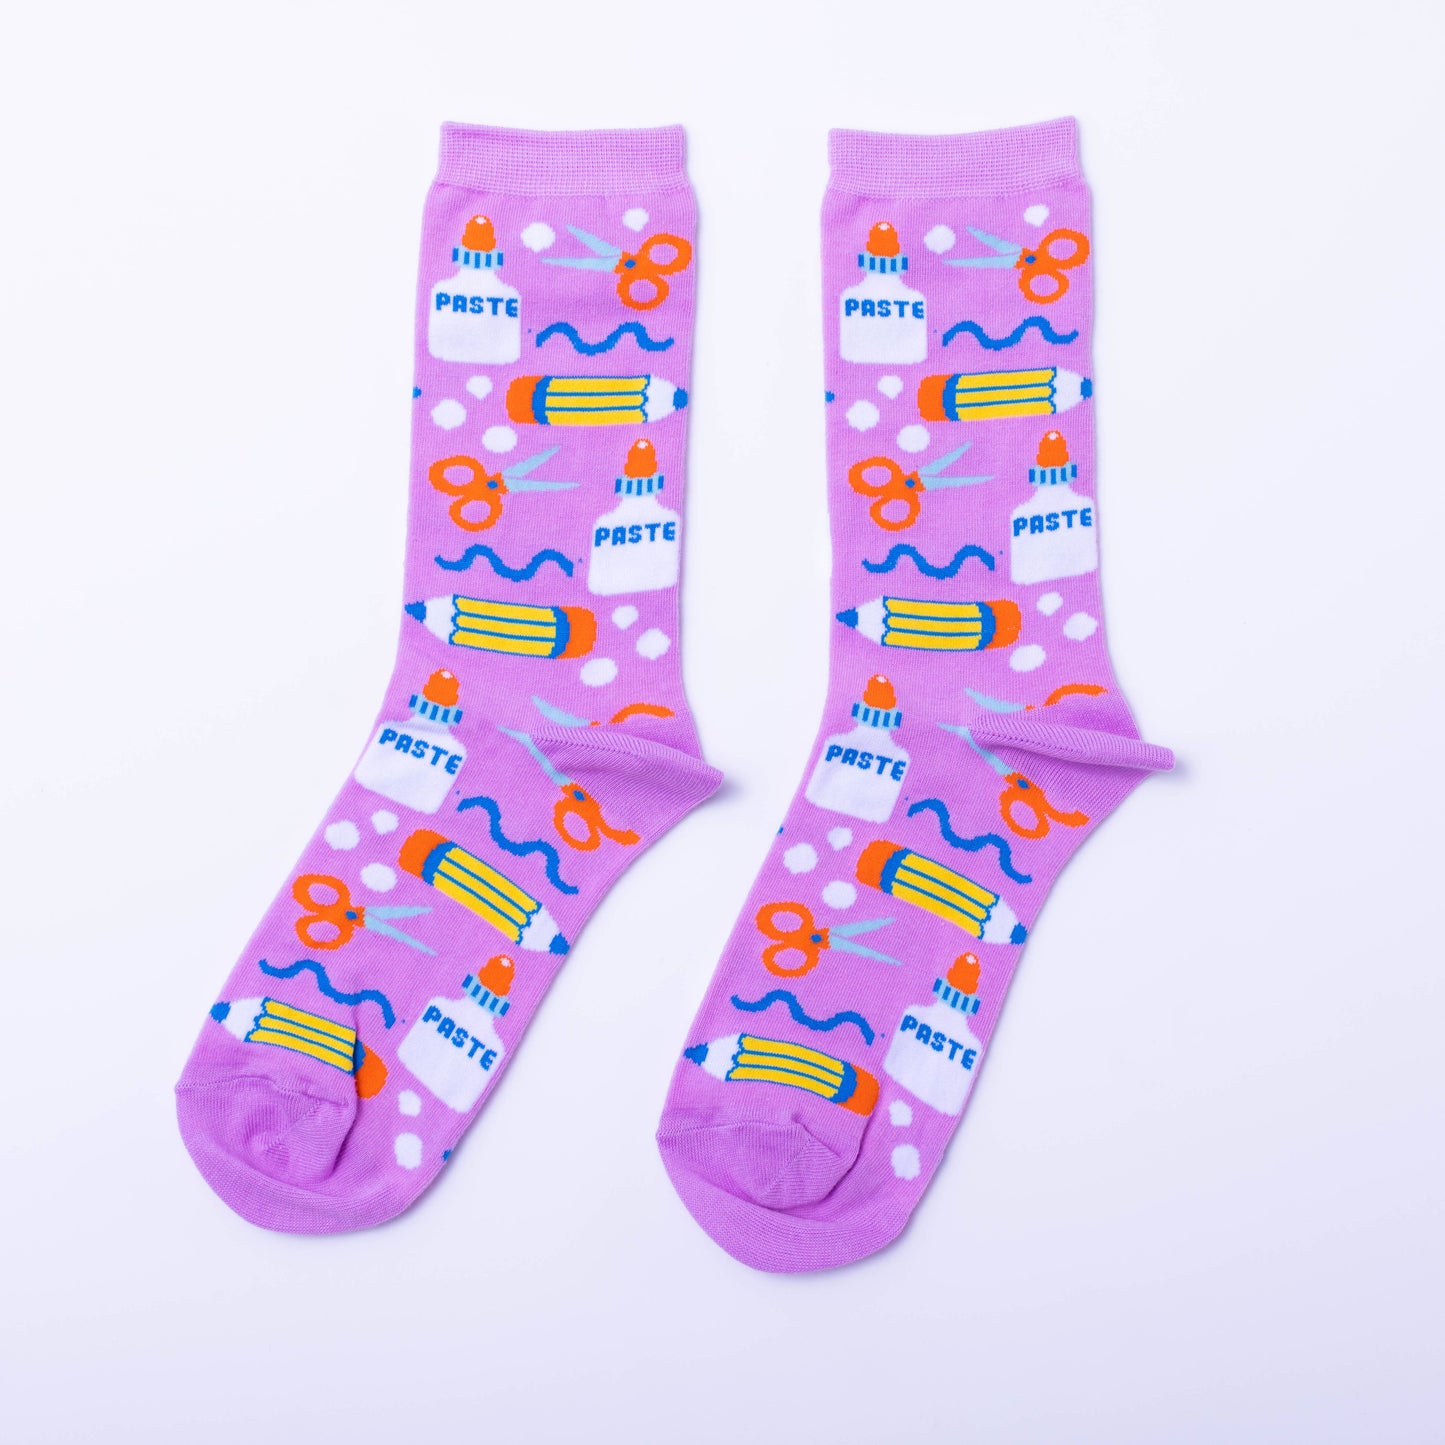 Crafty Women's Socks